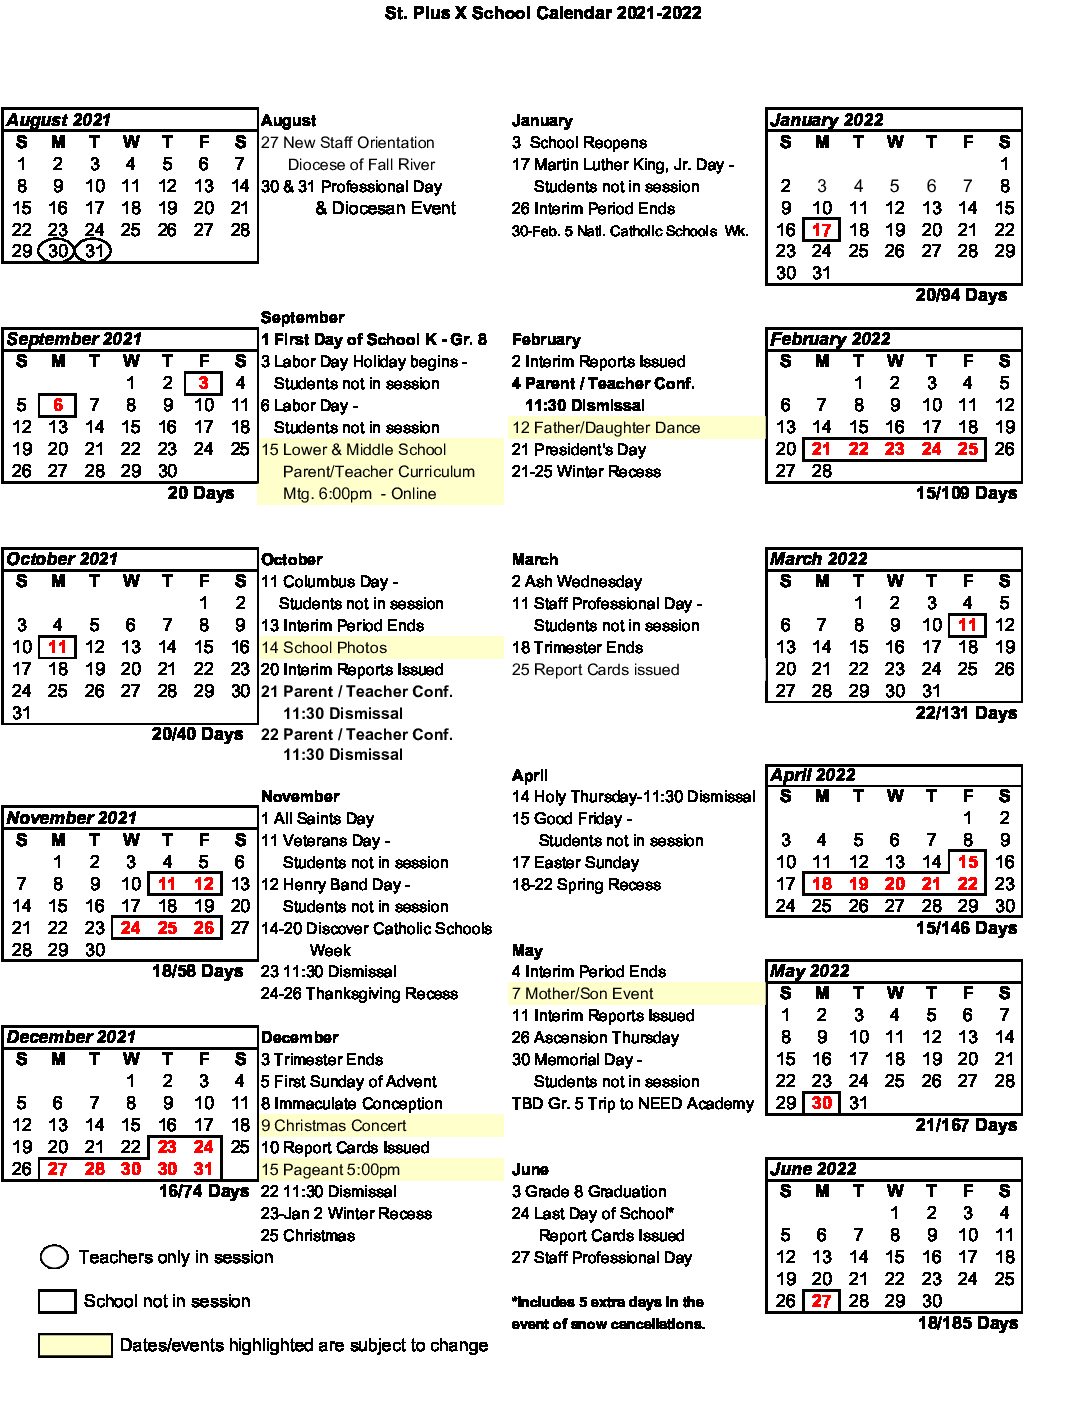 Calendar 2021-2022 - St. Pius